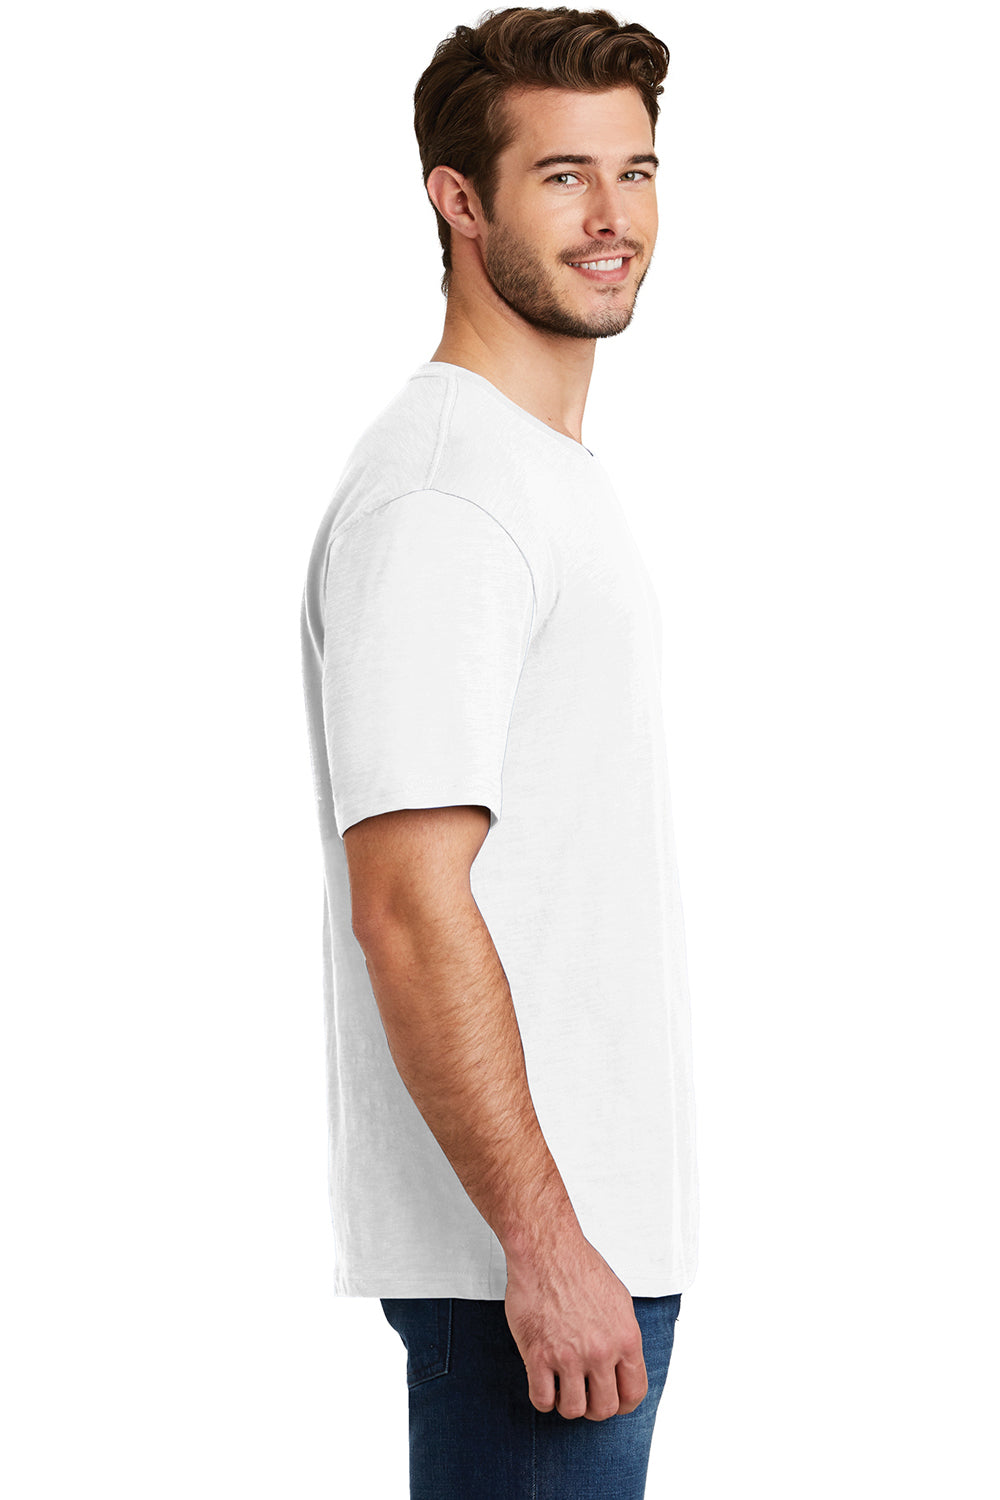 District DM3000 Mens Super Slub Short Sleeve Crewneck T-Shirt White Side